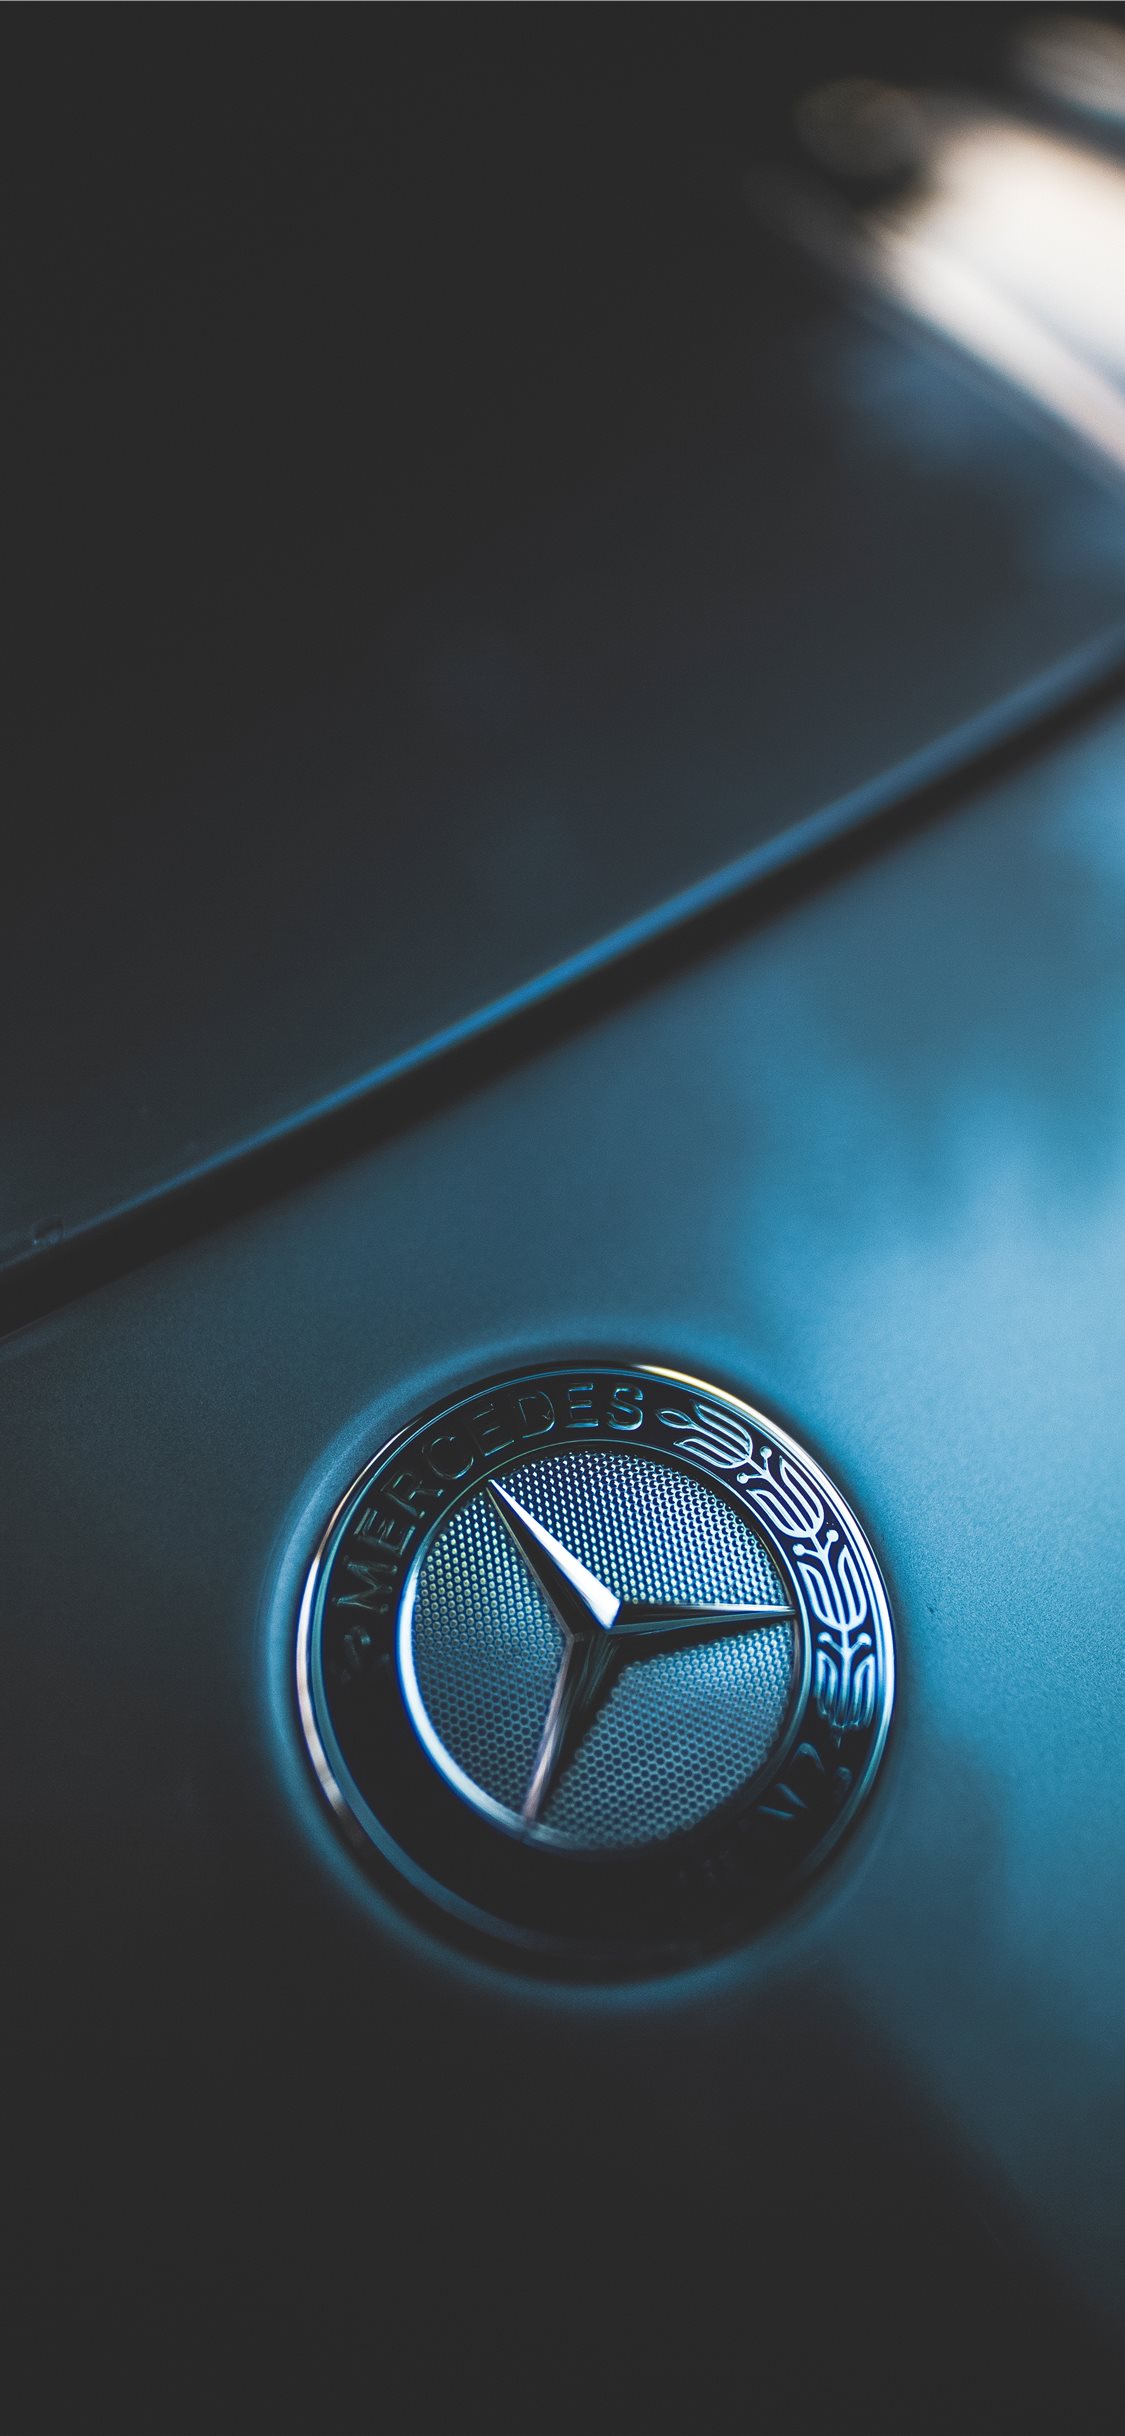 Closeup Photo Of Mercedes Benz Emblem Iphone Wallpapers Free Download